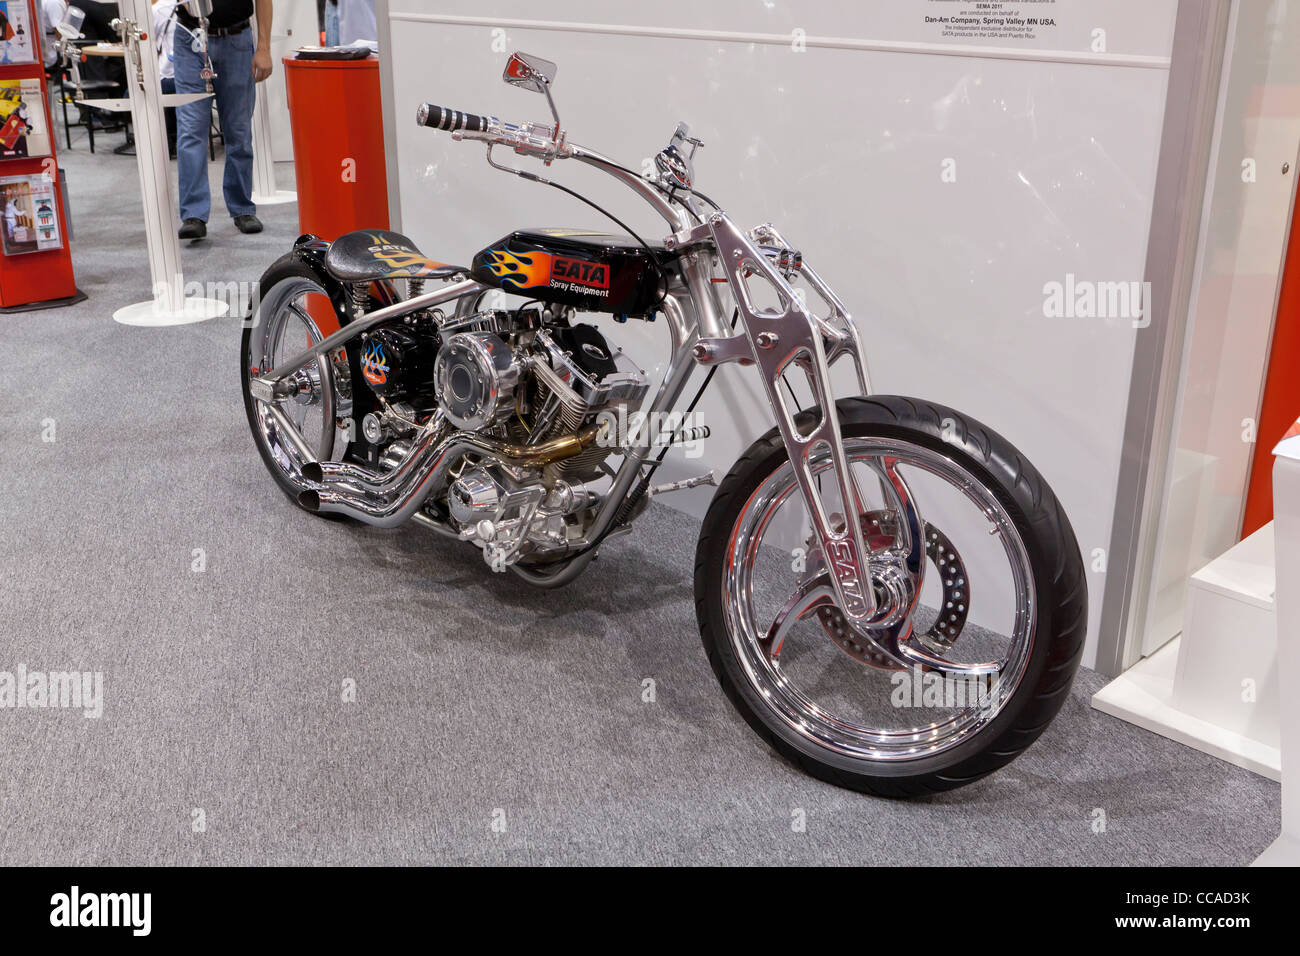 A chopper motorcycle - USA Stock Photo